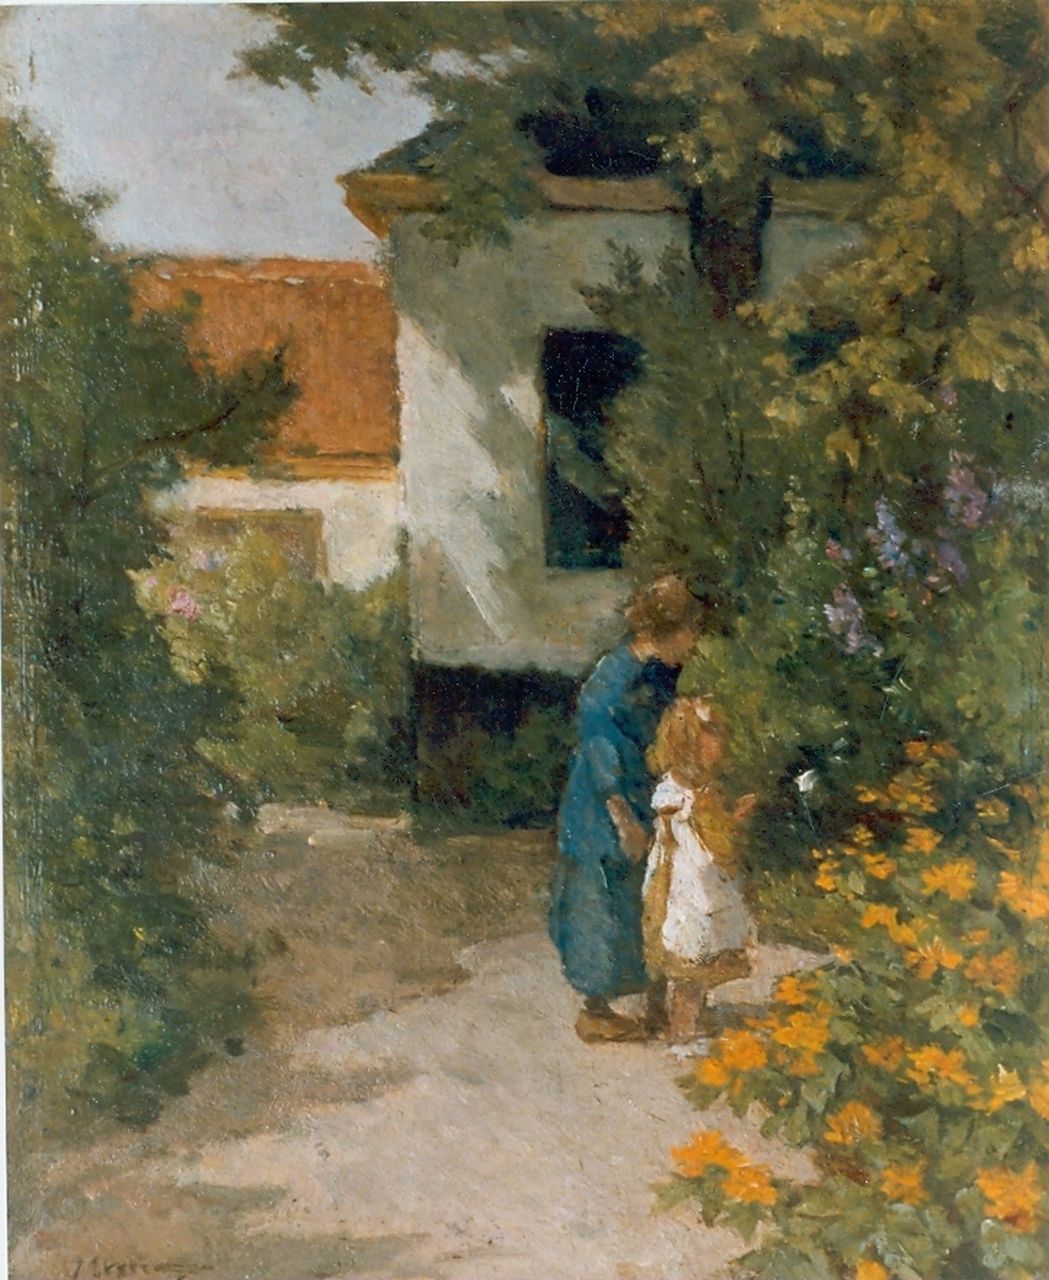 Akkeringa J.E.H.  | 'Johannes Evert' Hendrik Akkeringa, A flower garden with two girls, Öl auf Leinwand auf Holz 28,3 x 23,0 cm, signed l.l.